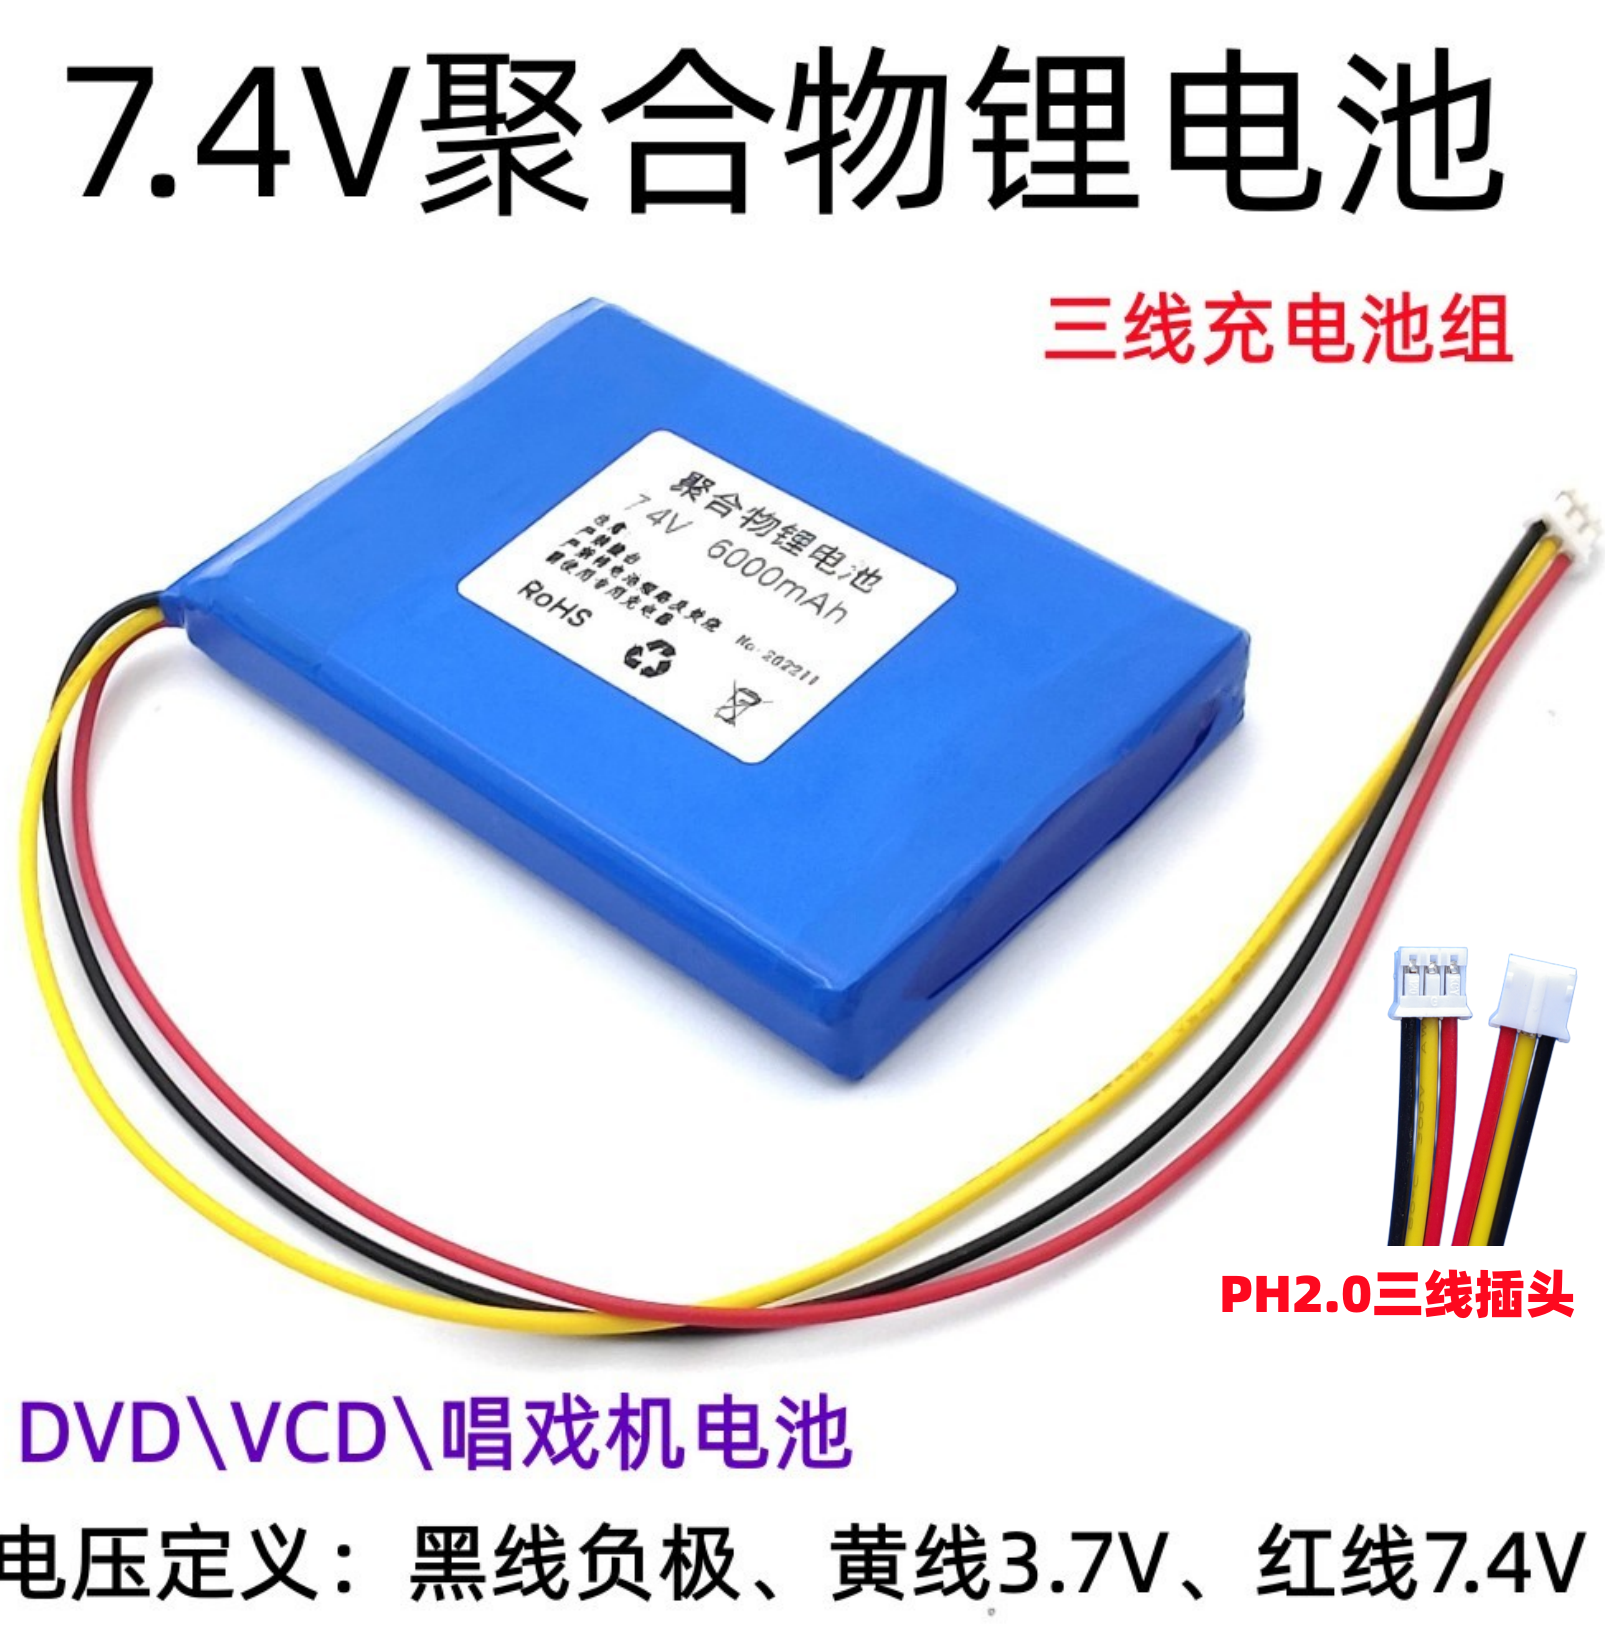 7.4V聚合物锂电池先科DVD三线2.0插头10000mAh音响EVD充电锂电芯